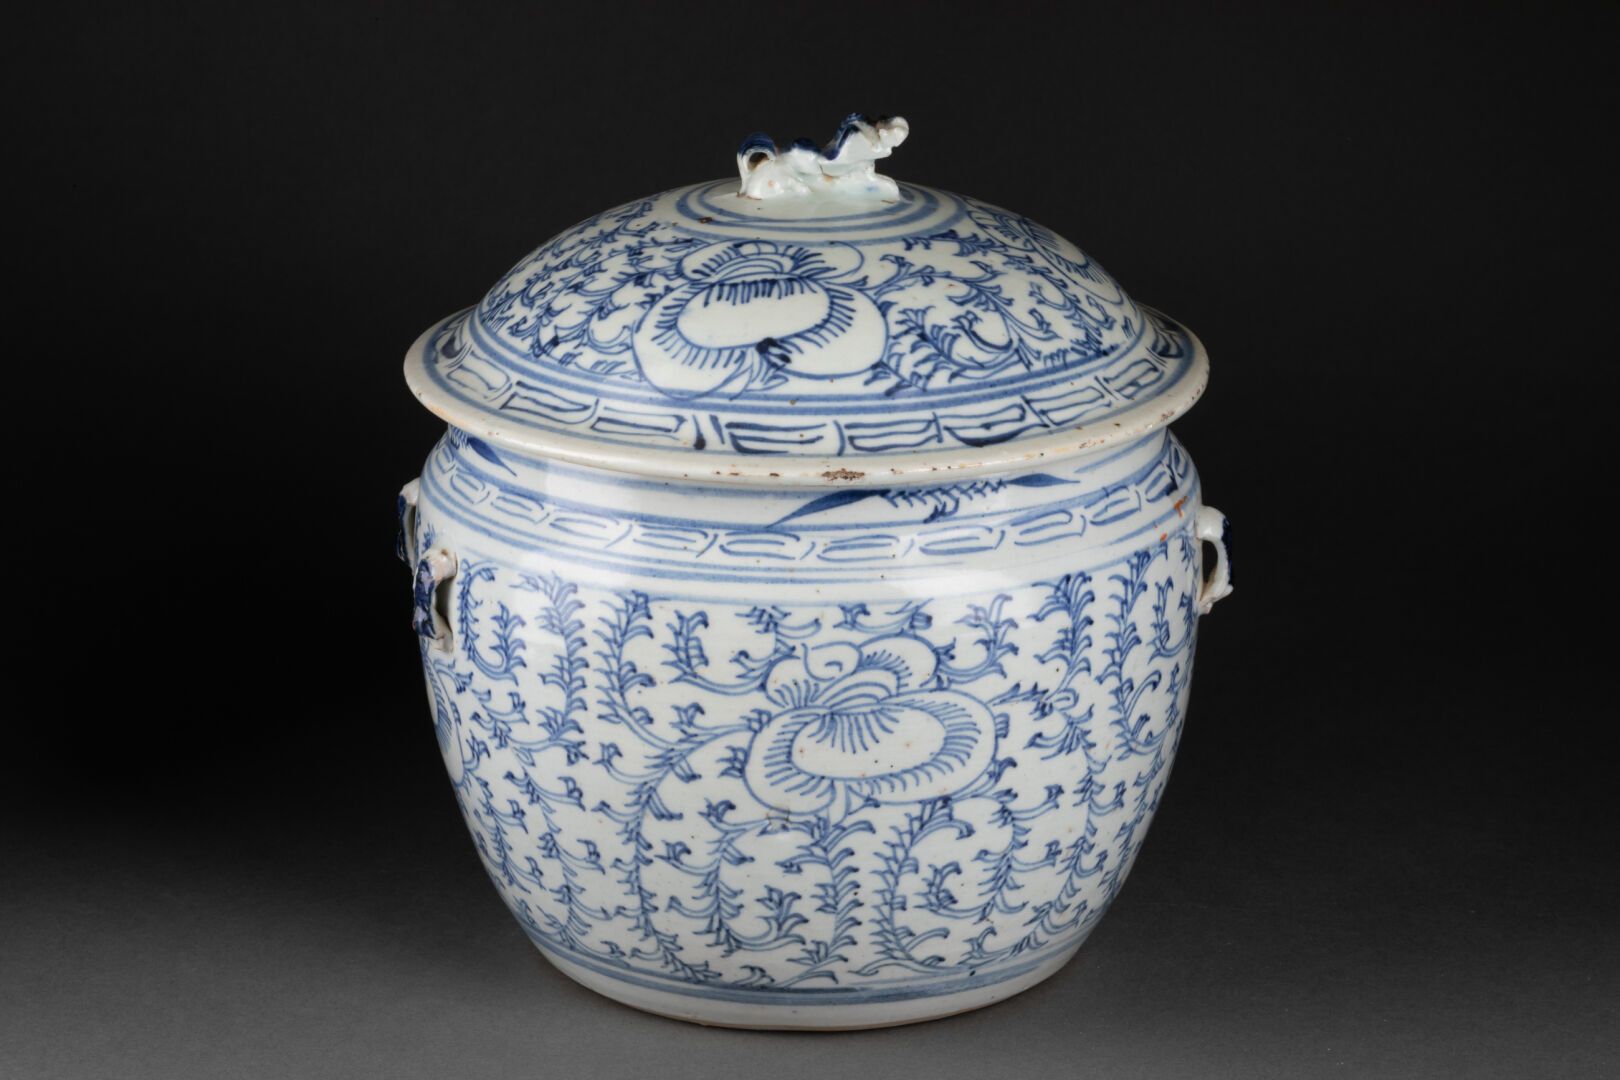 CHINE - Fin XIXe siècle 覆盖的POT与风格化的叶子

瓷器和蓝色釉下彩

H.23.5厘米 - 宽24厘米